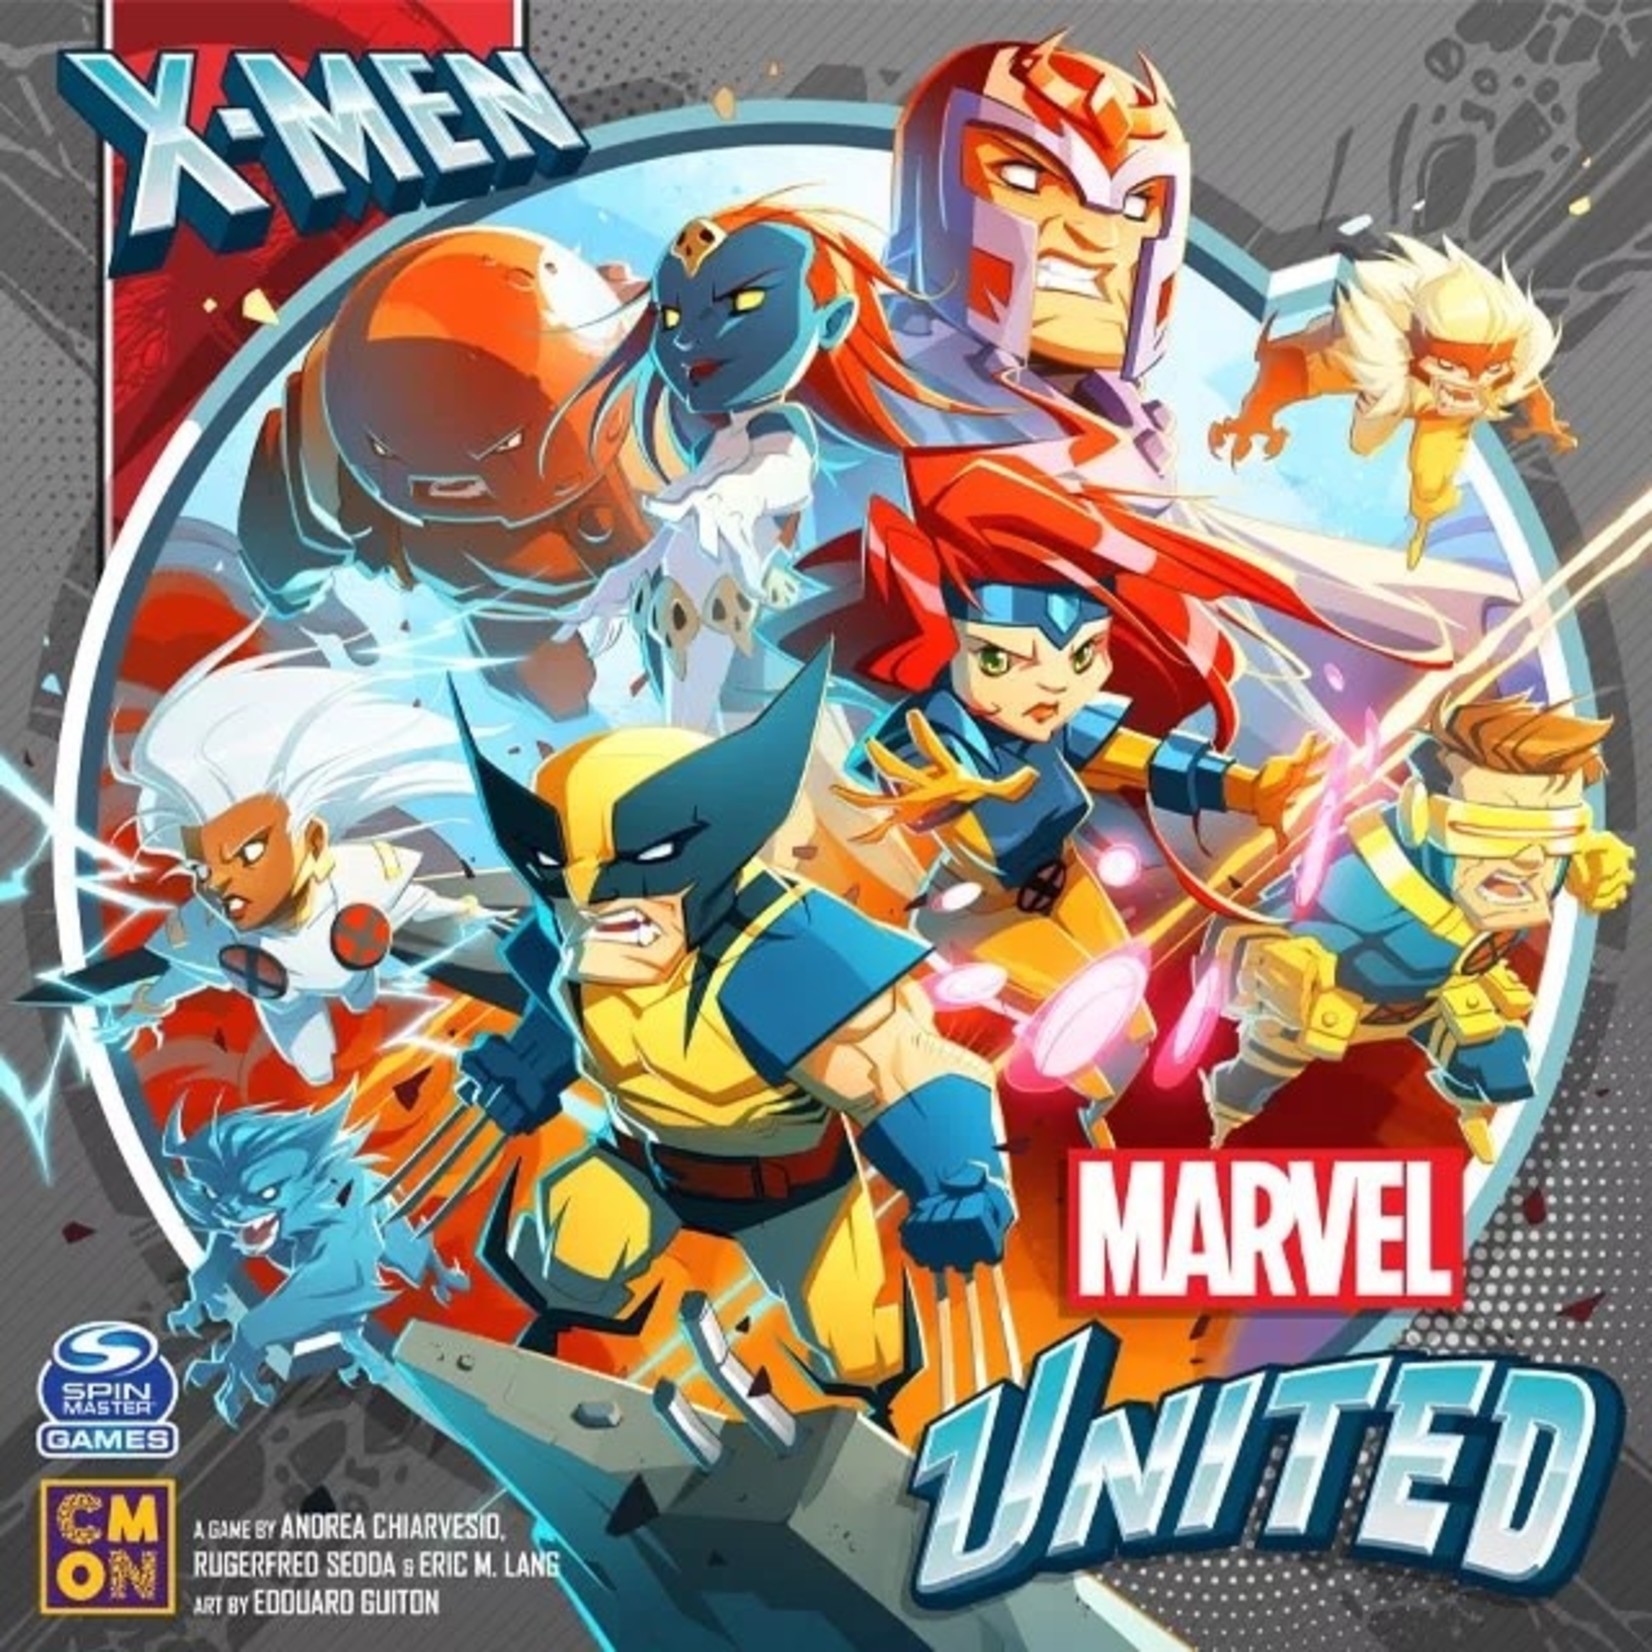 CMON Marvel United X-Men Mutant Bundle